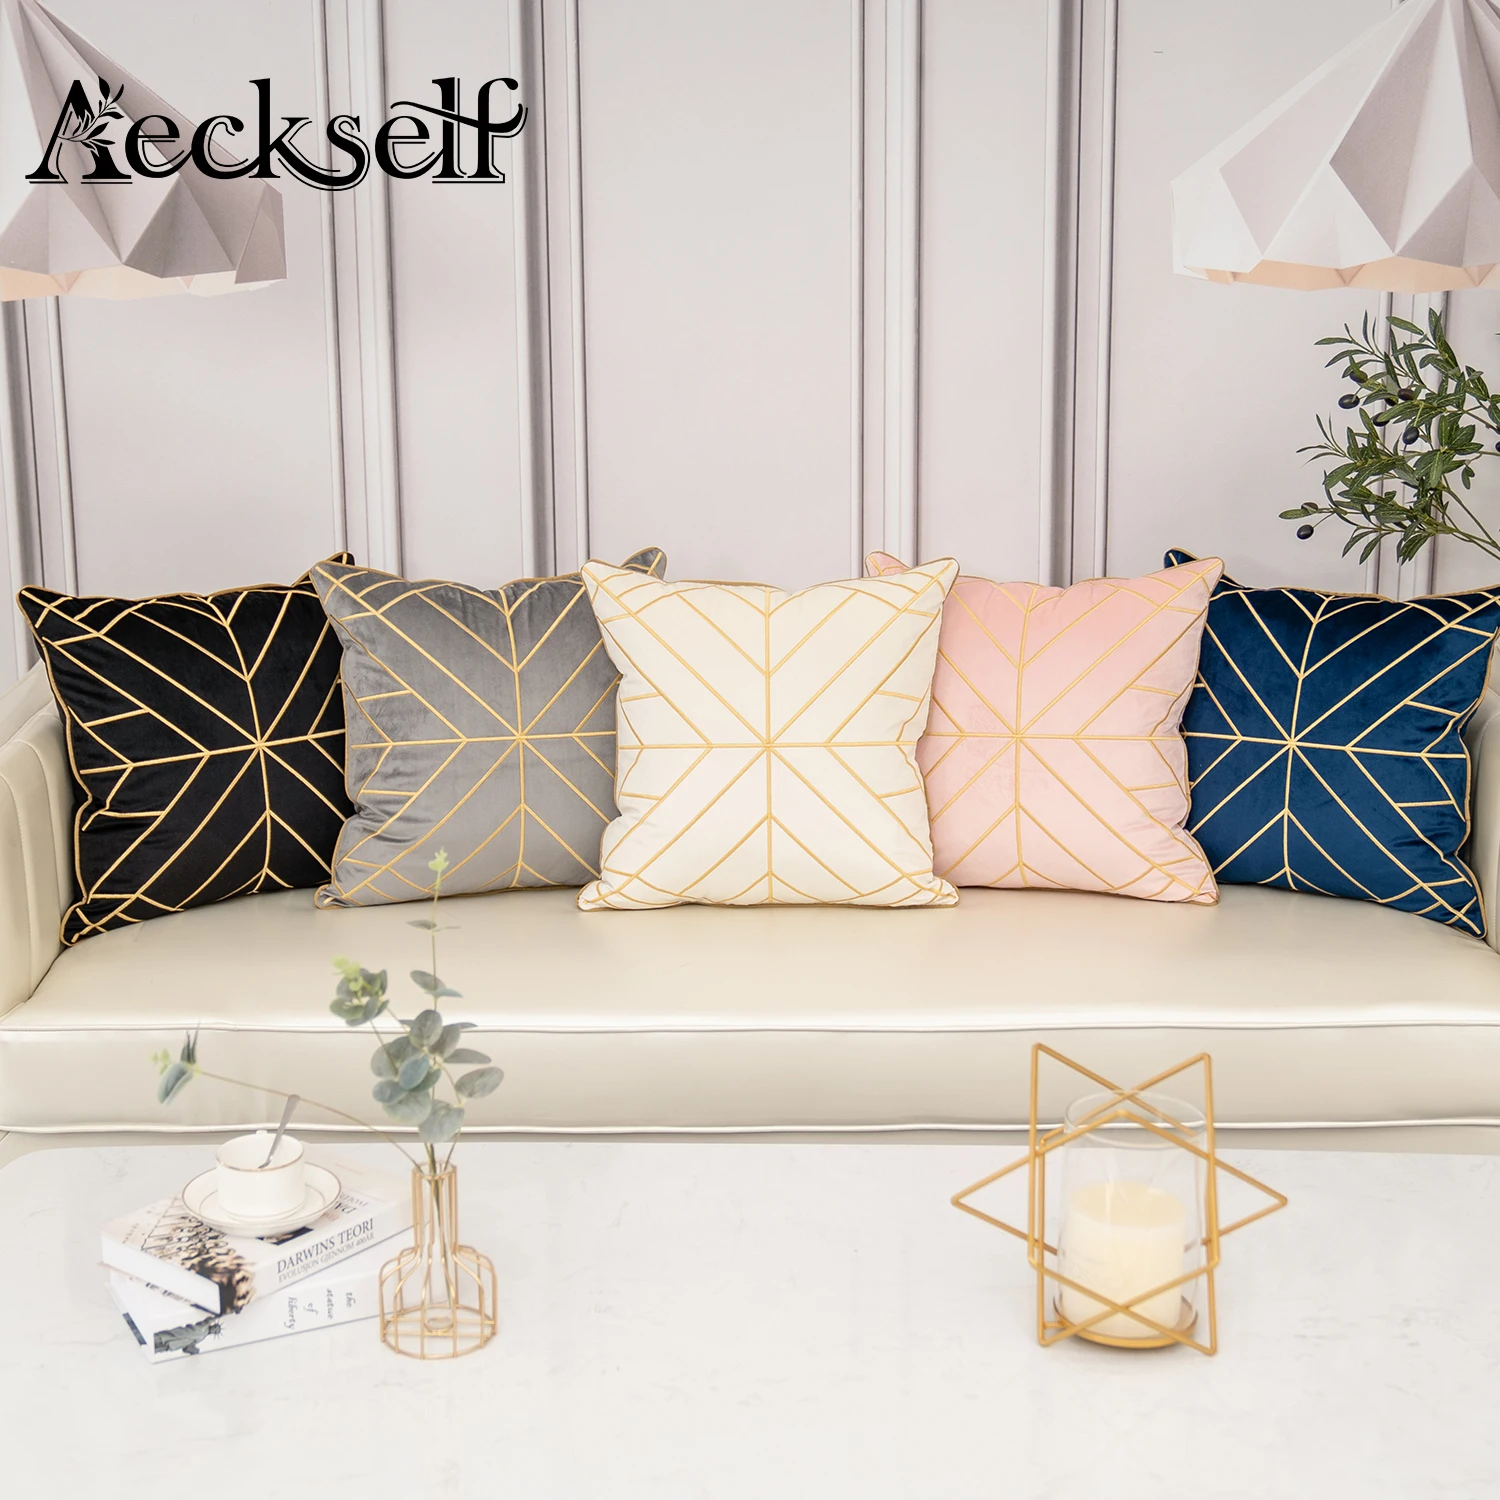 Aeckself Luxury Geometric Embroidery Velvet Cushion Cover Home Decor Navy Blue Gold Gray Black White Throw Pillow Case